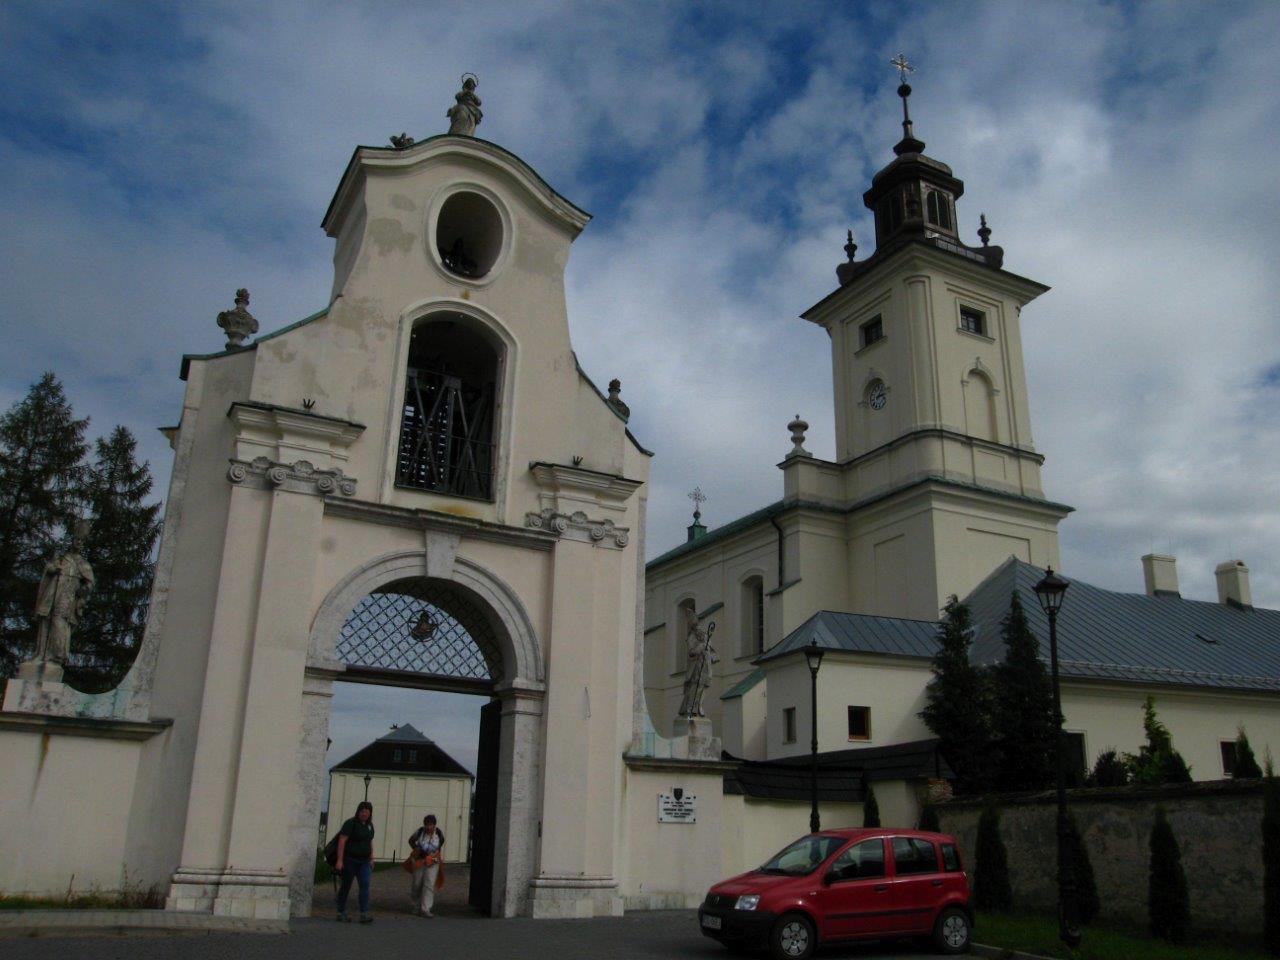 fot. 9. Klasztor Norbertanek w Imbramowicach. fot. P. Kokoszka